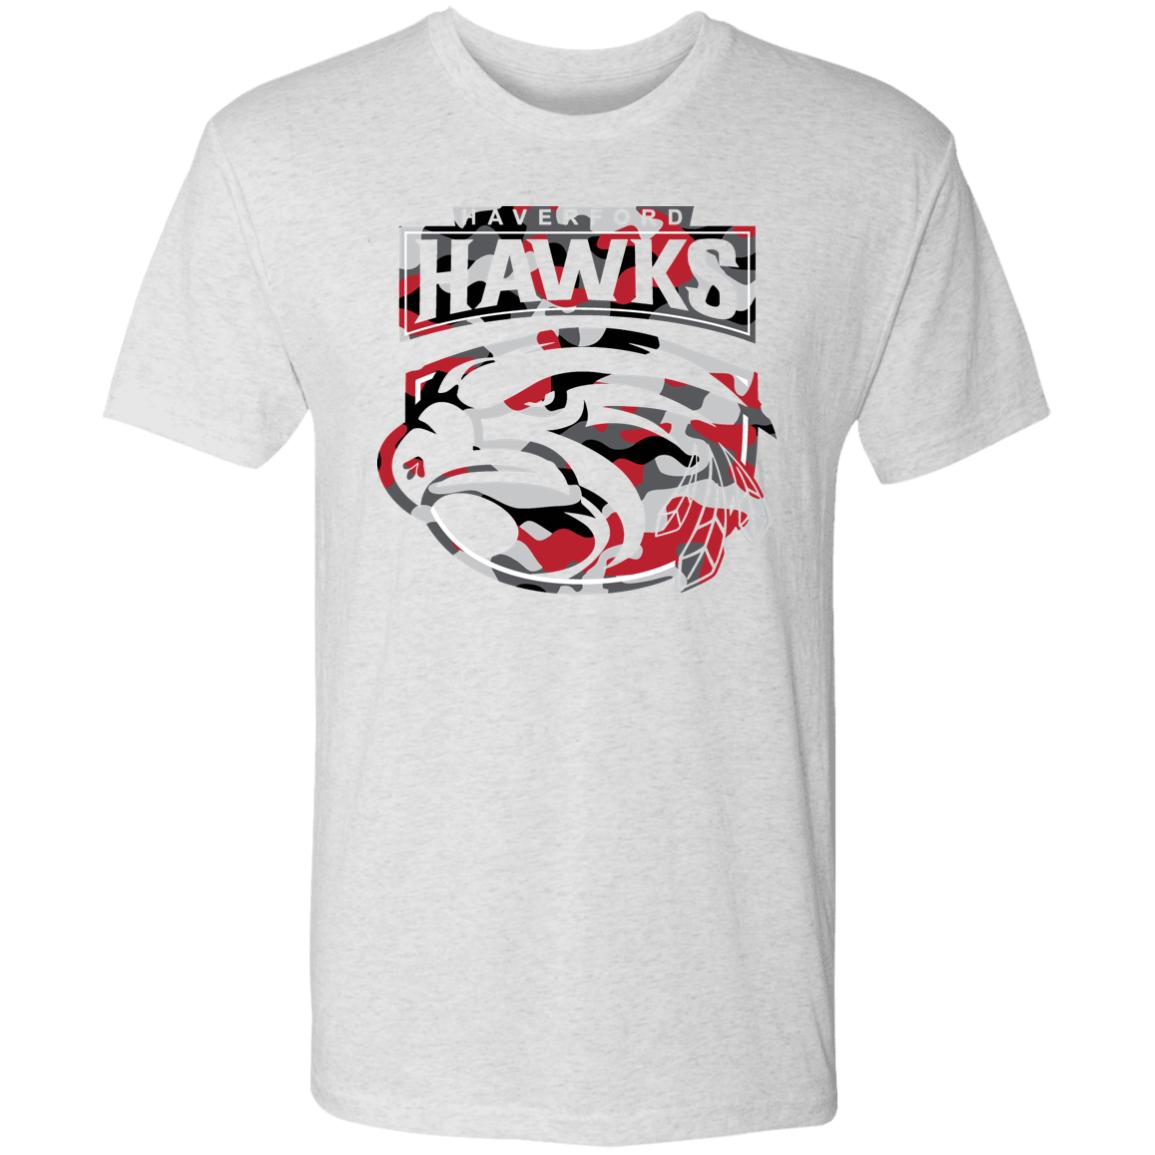 Hawks Camouflage Men's Triblend T-Shirt